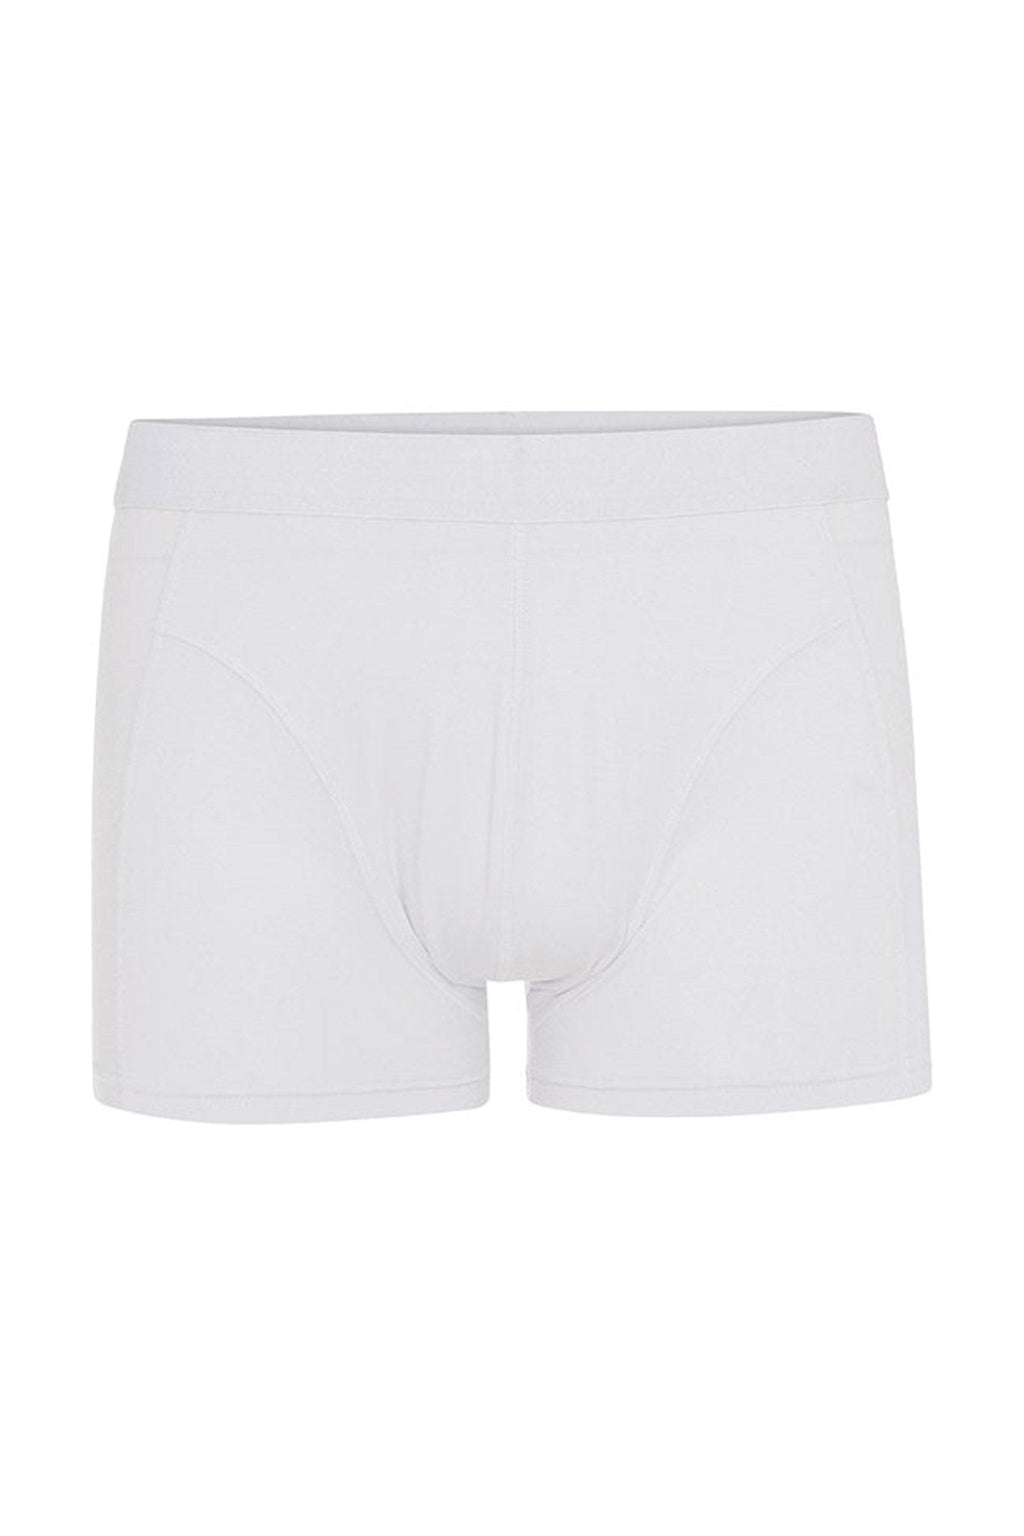 Underpants - Premium White